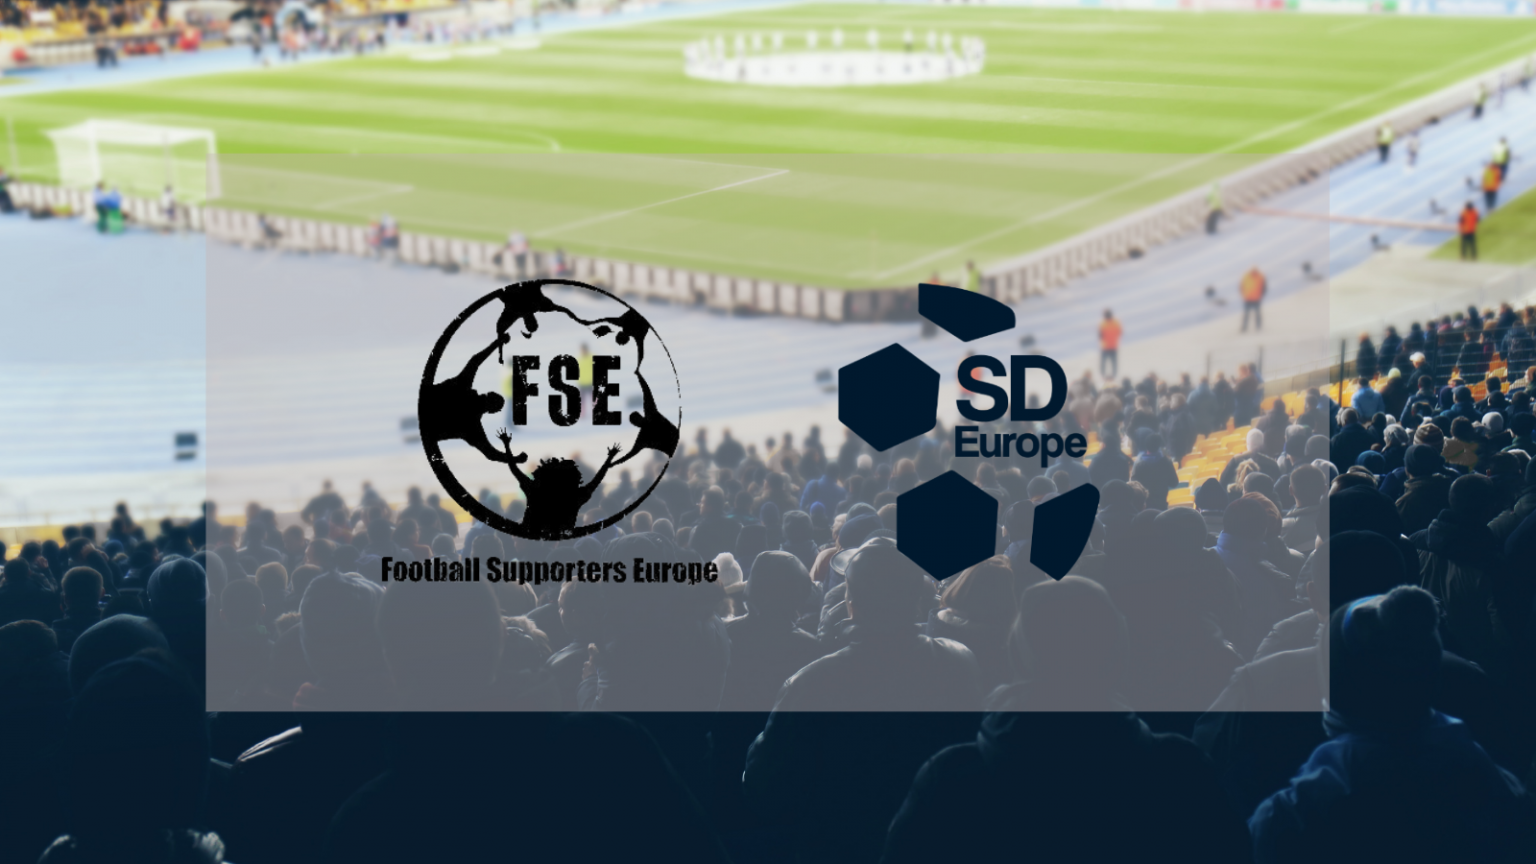 Comunicado de FSE y SD Europe